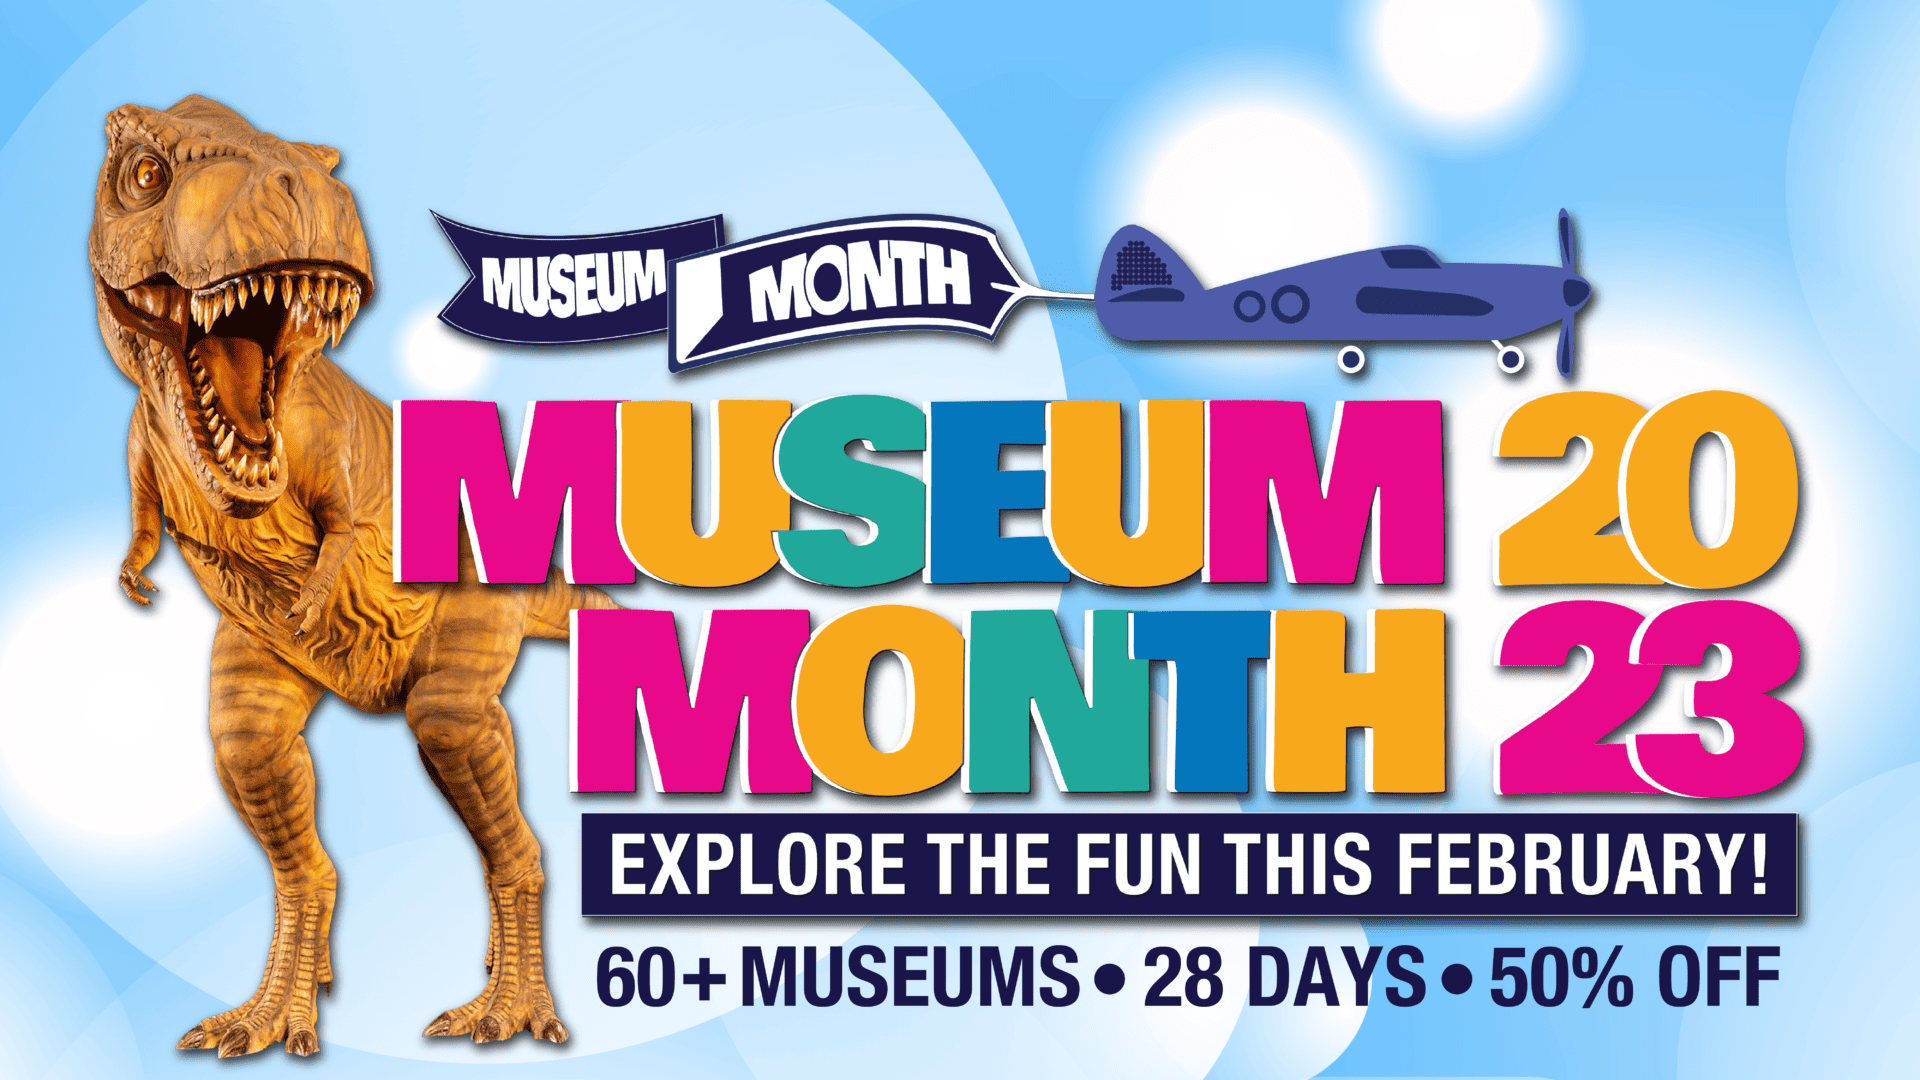 Explore the Fun All February Long!